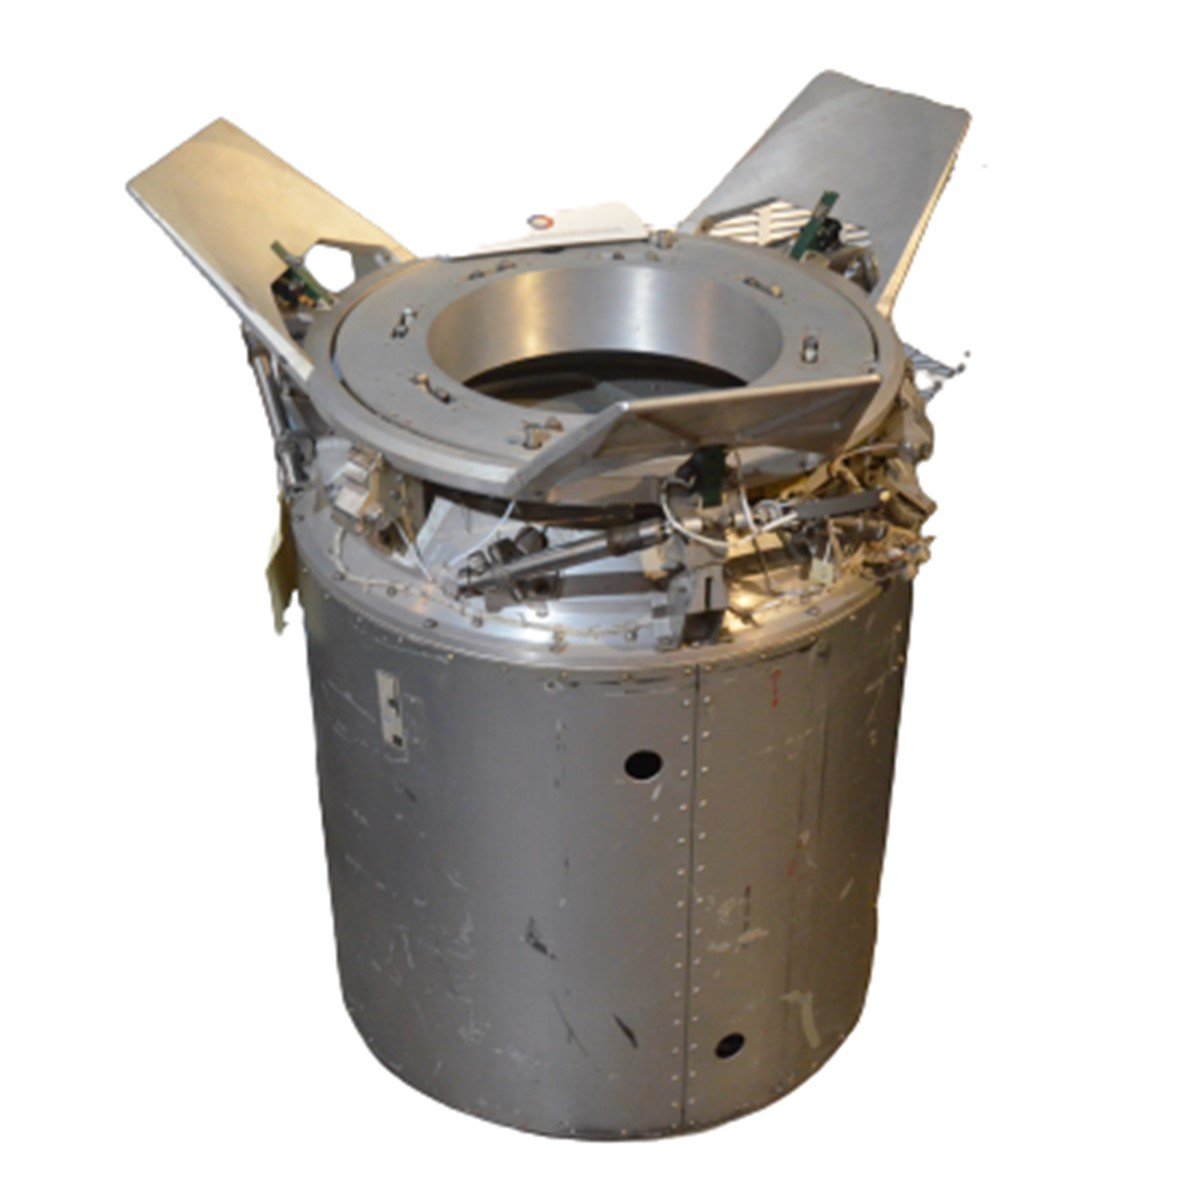 2/5 Scale Apollo-Soyuz Docking Adapter Engineering Model